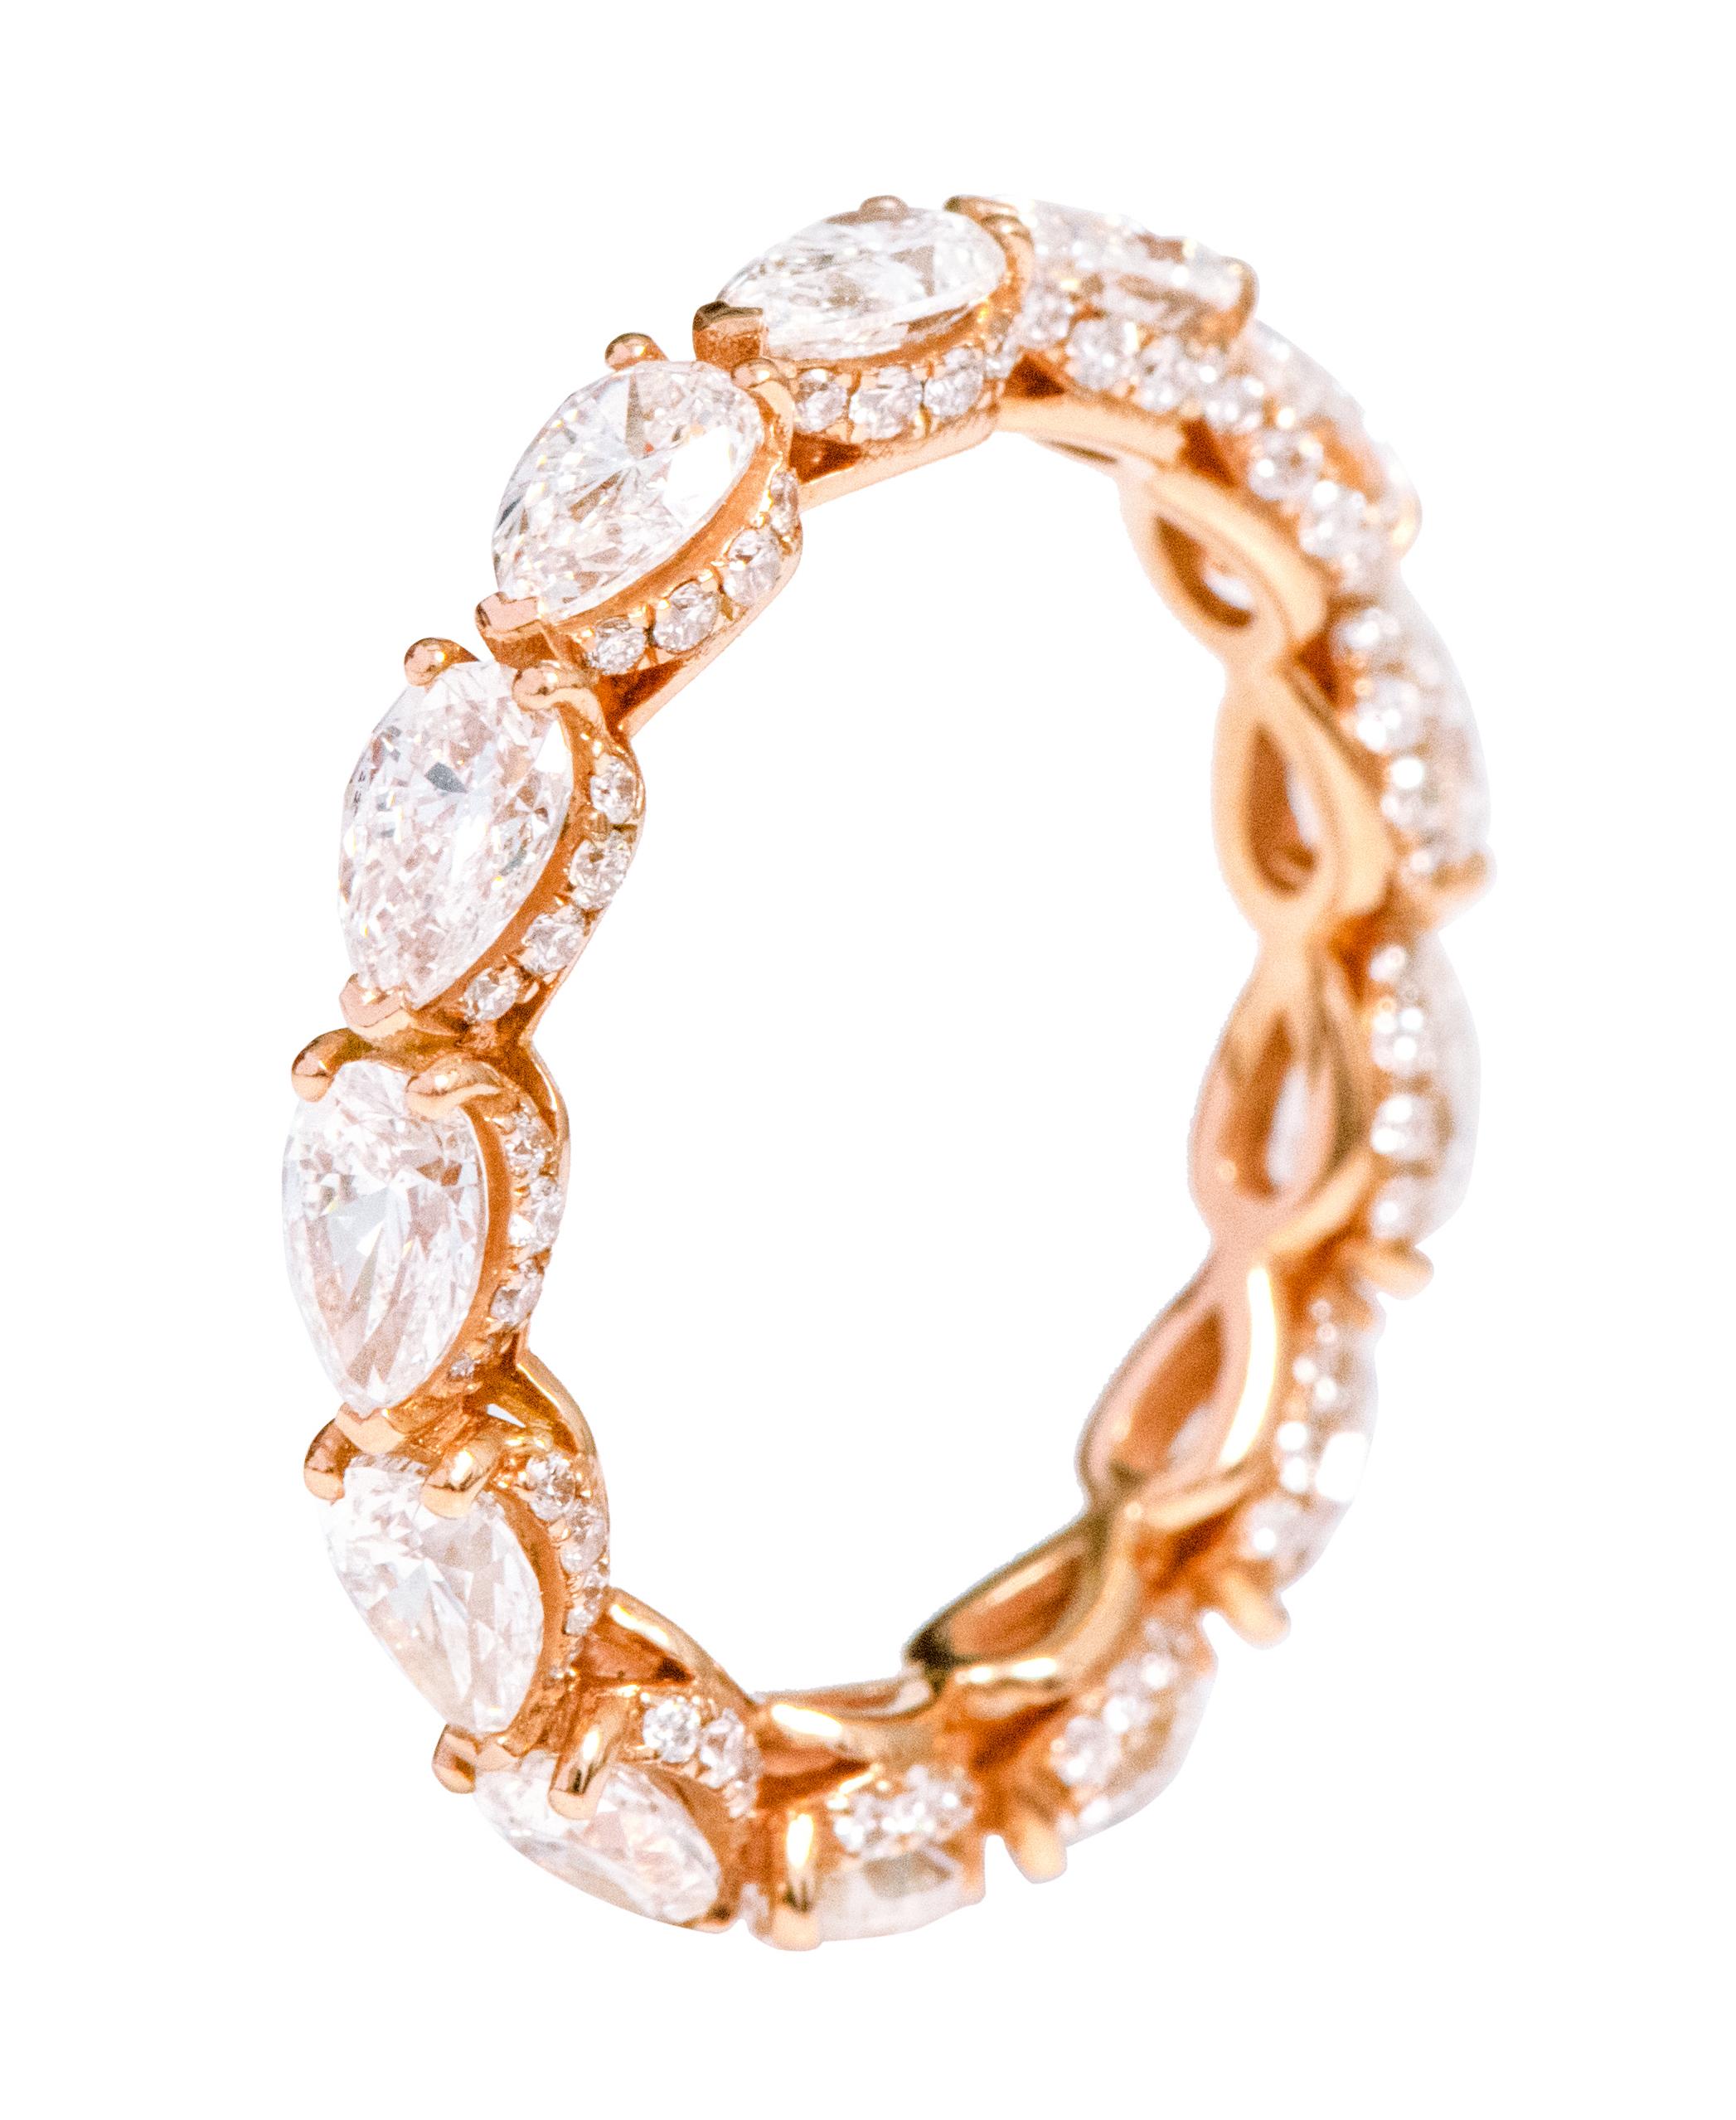 Women's 18 Karat Rose Gold 3.63 Carat Solitaire Pear-Shape Diamond Eternity Band Ring For Sale